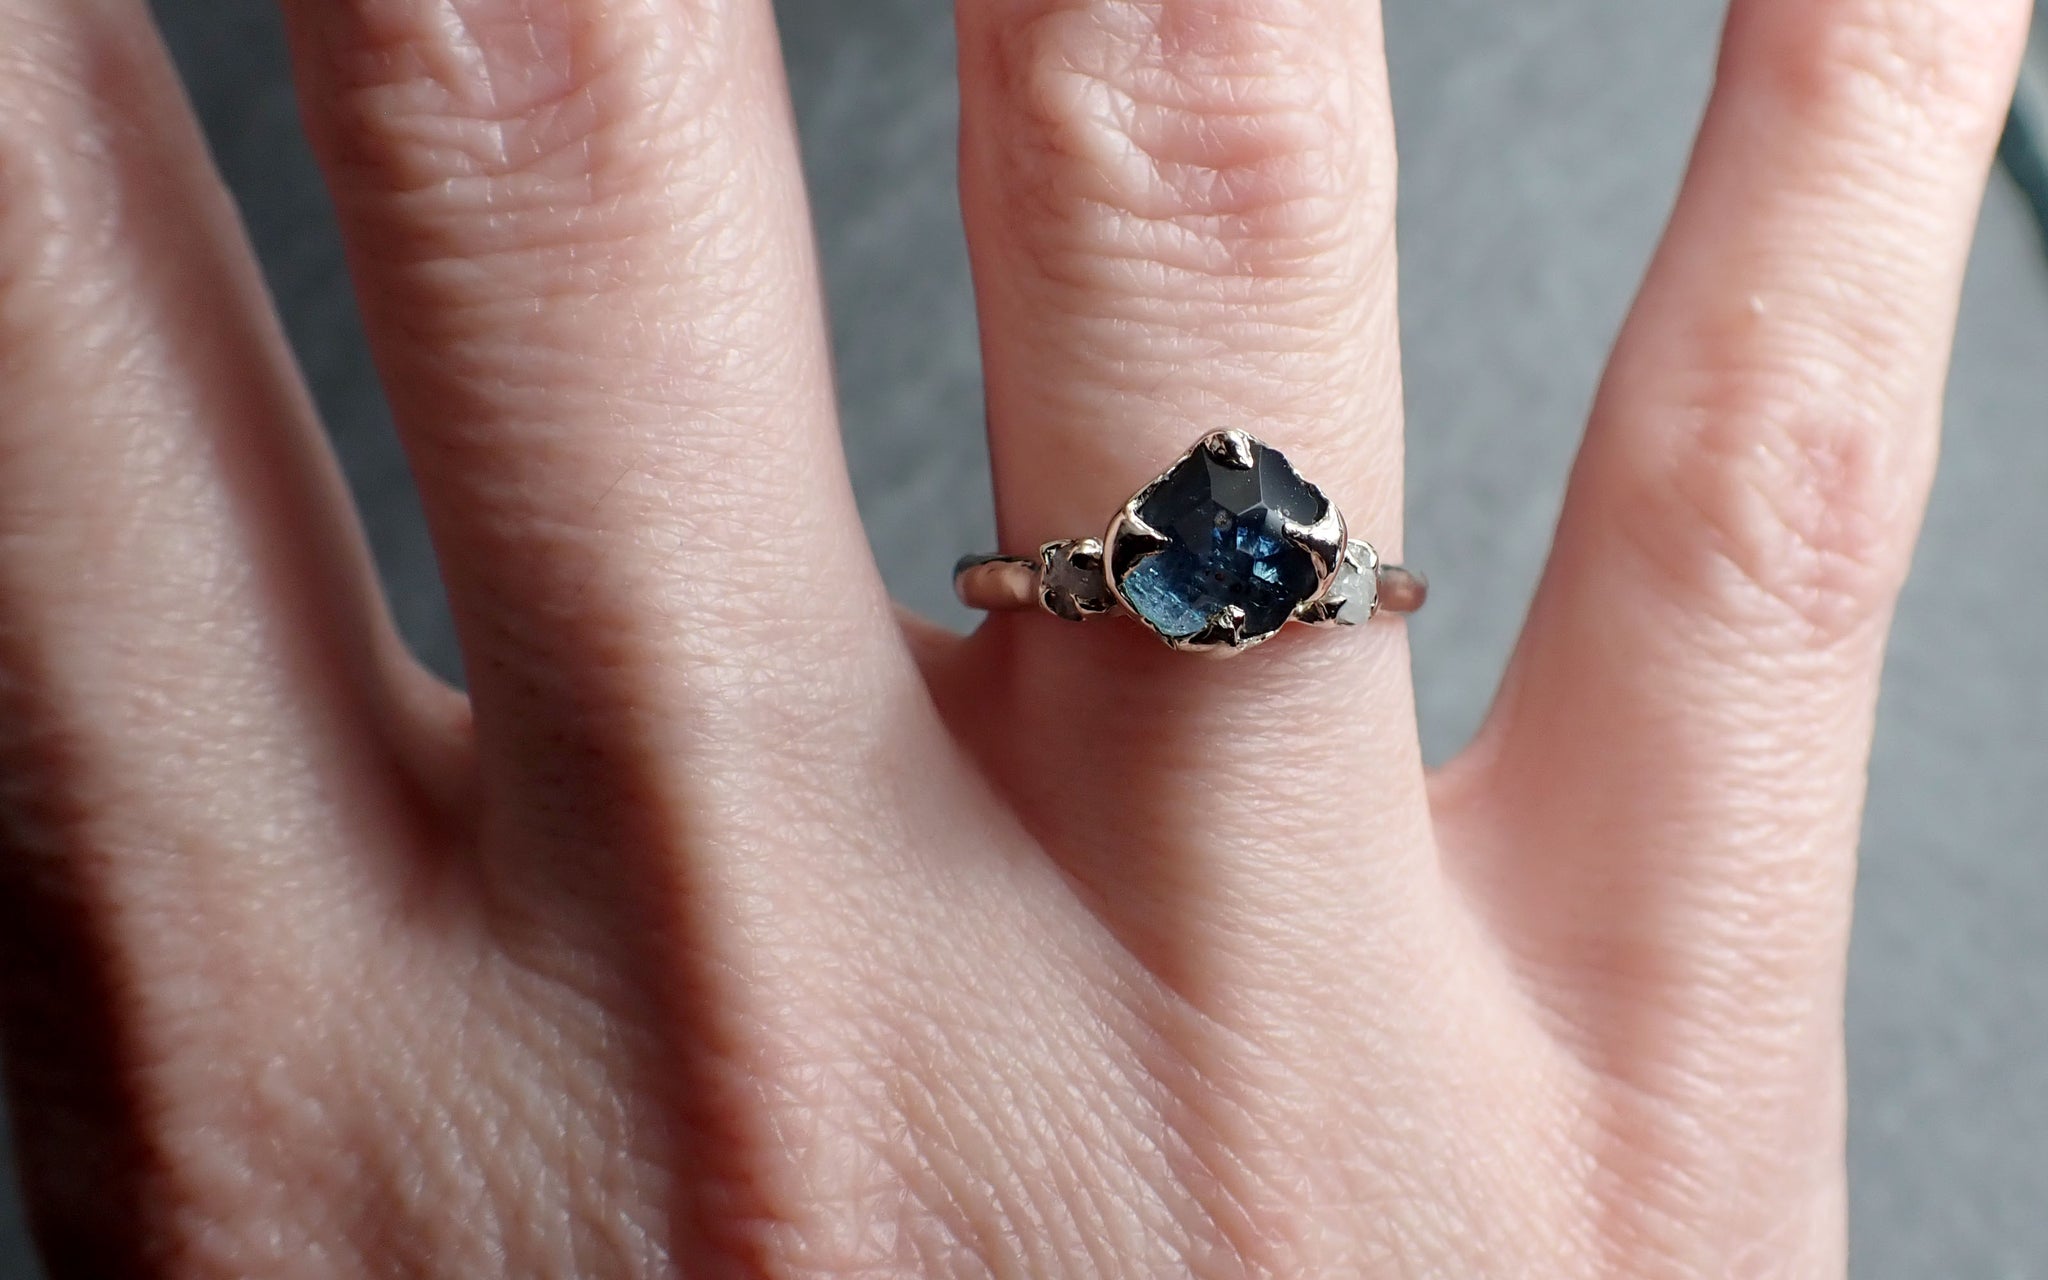 partially faceted montana sapphire diamond 14k white gold engagement ring wedding ring custom blue gemstone ring multi stone ring 2436 Alternative Engagement